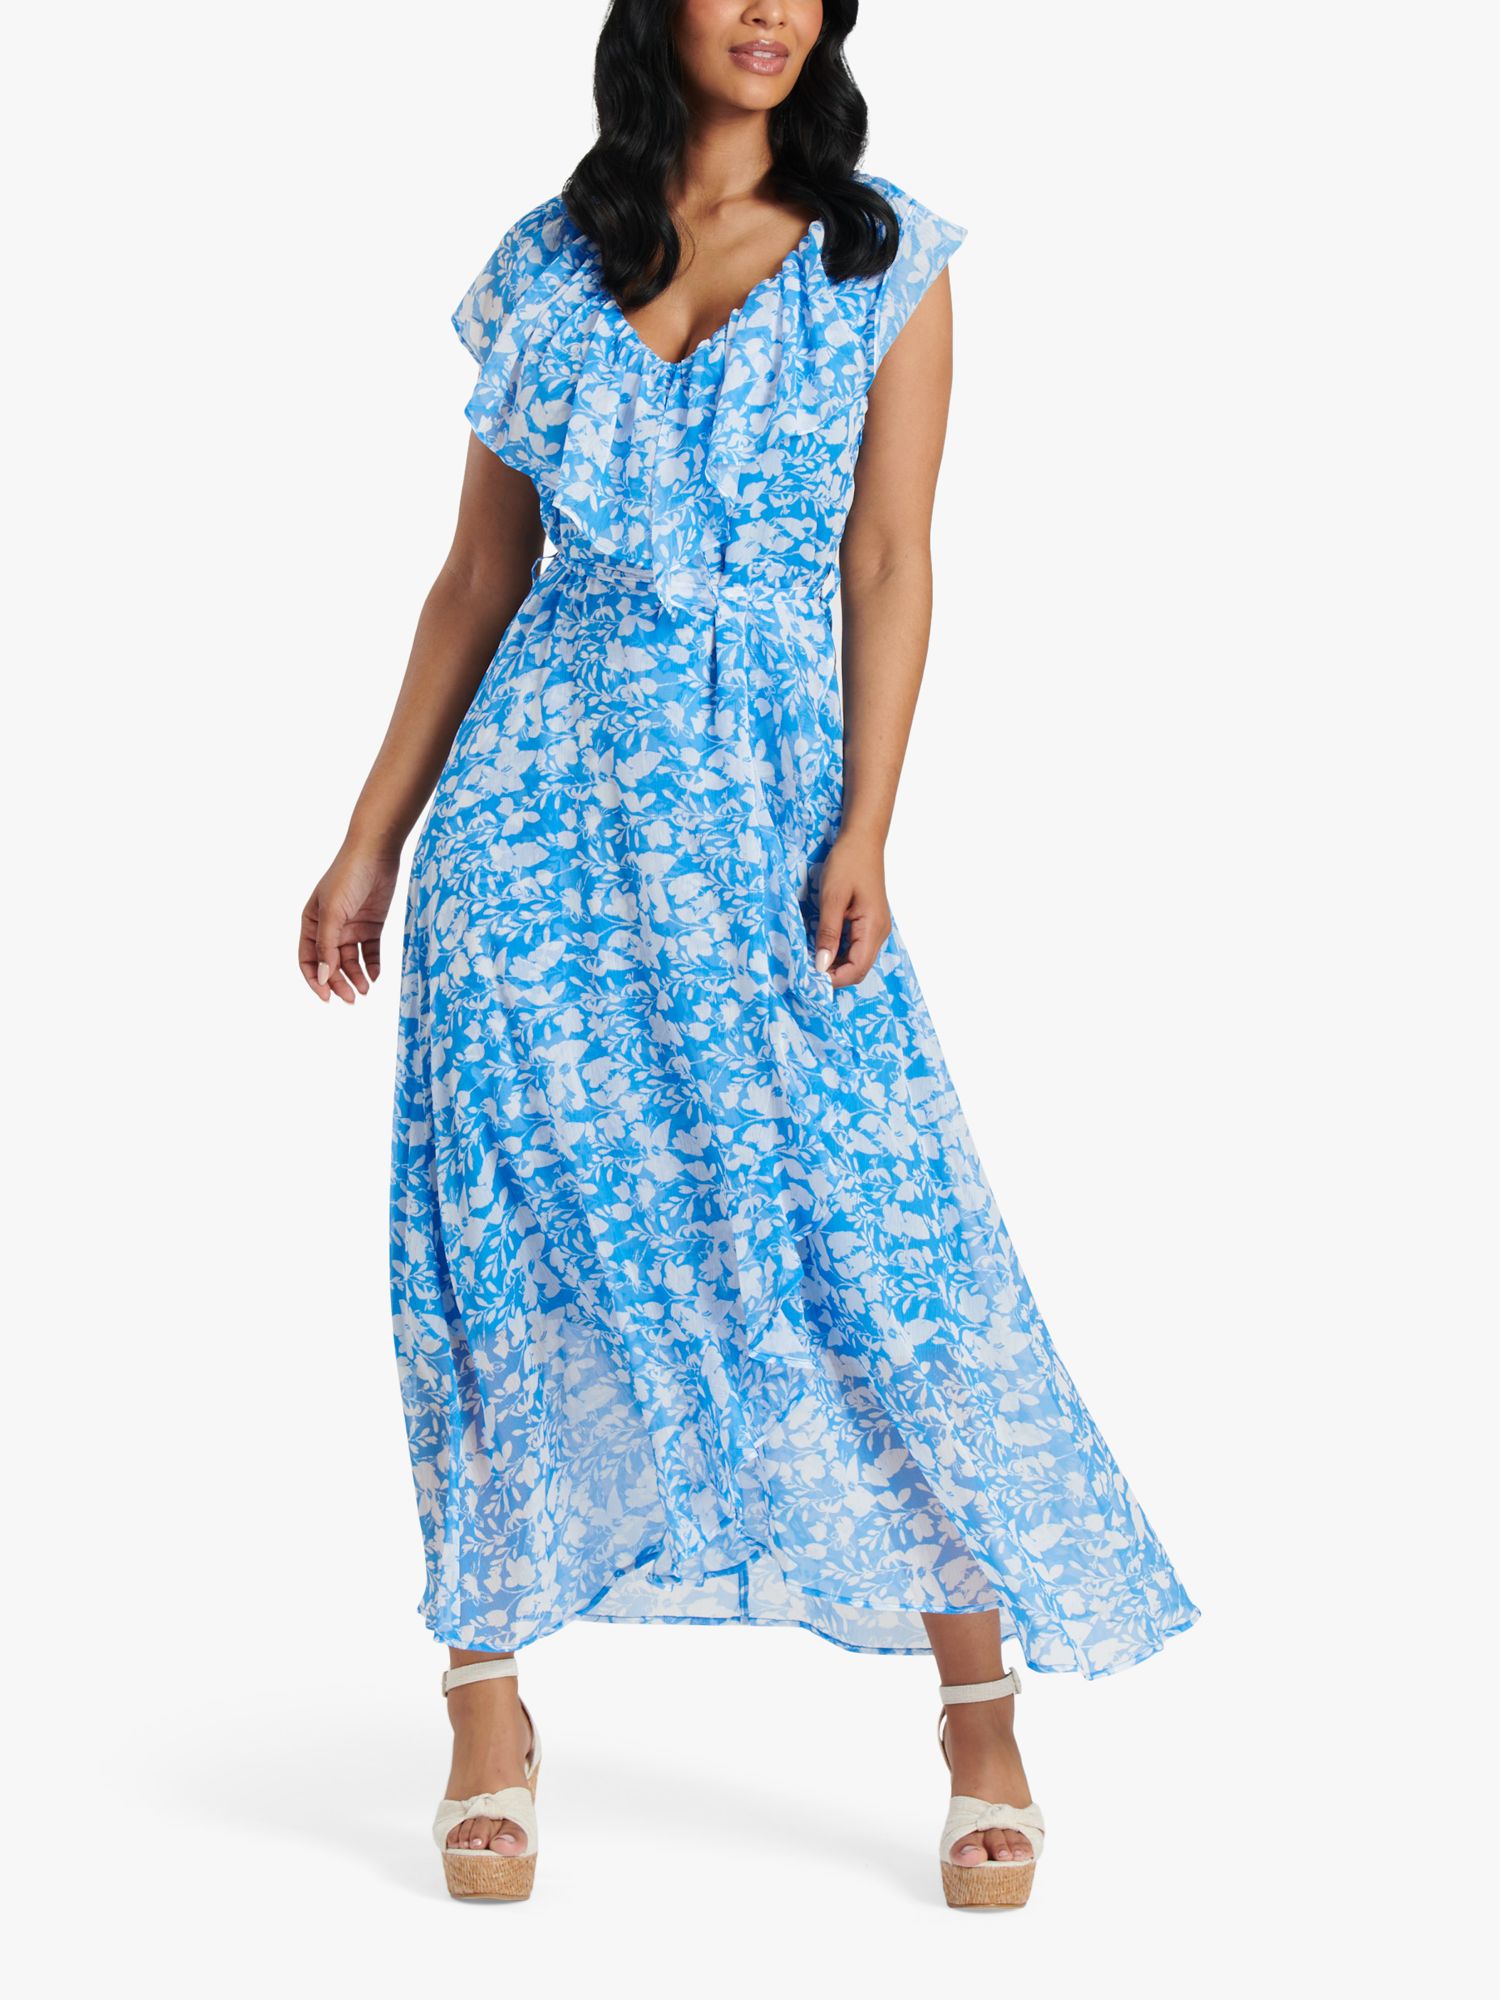 South Beach Chiffon Print Frill Neck Midi Dress, Blue/White, 8